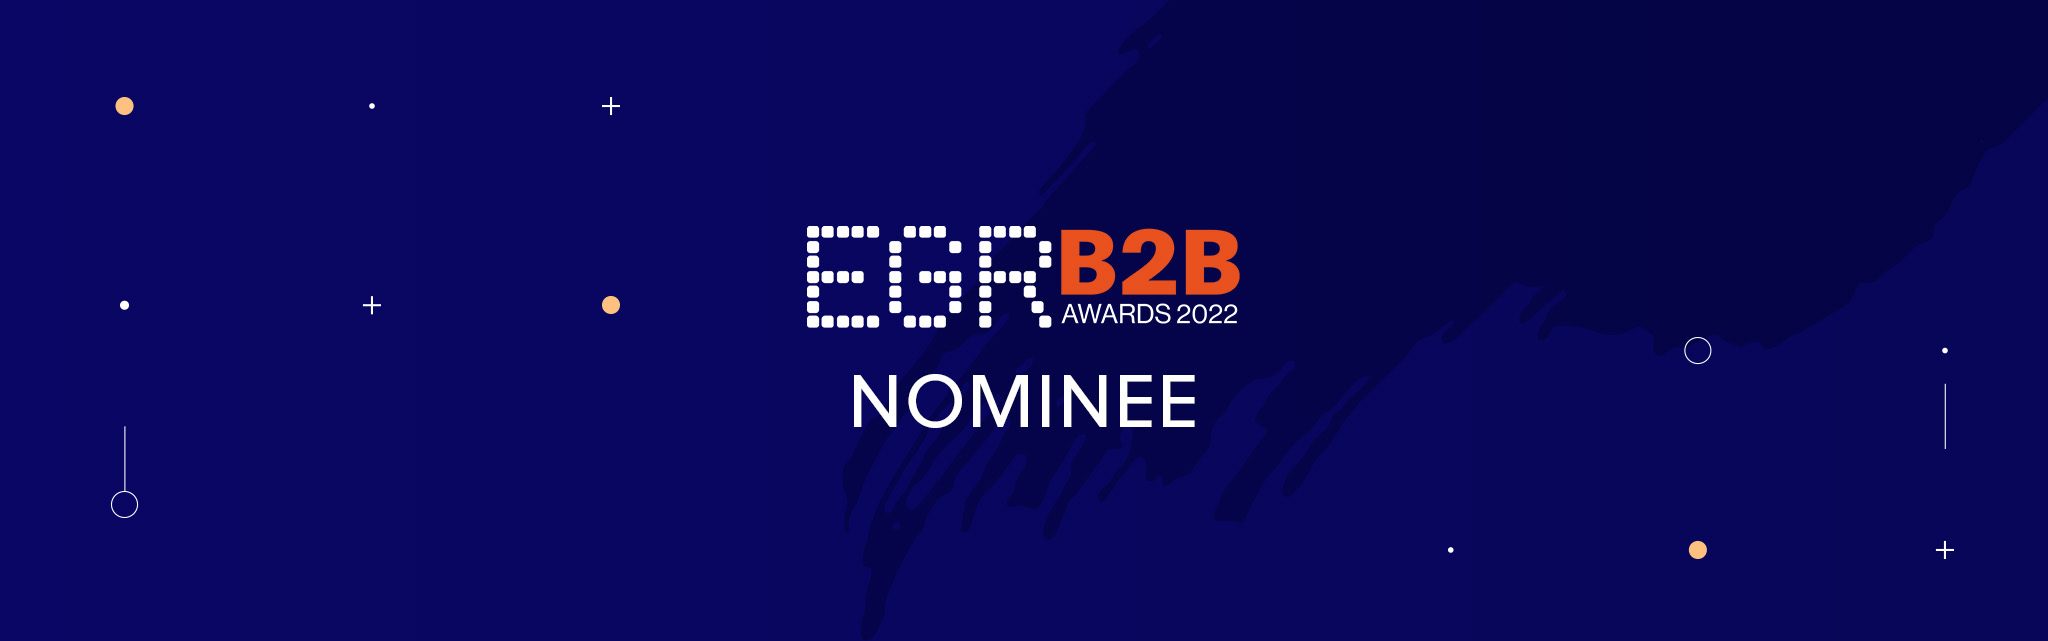 EGR B2B awards